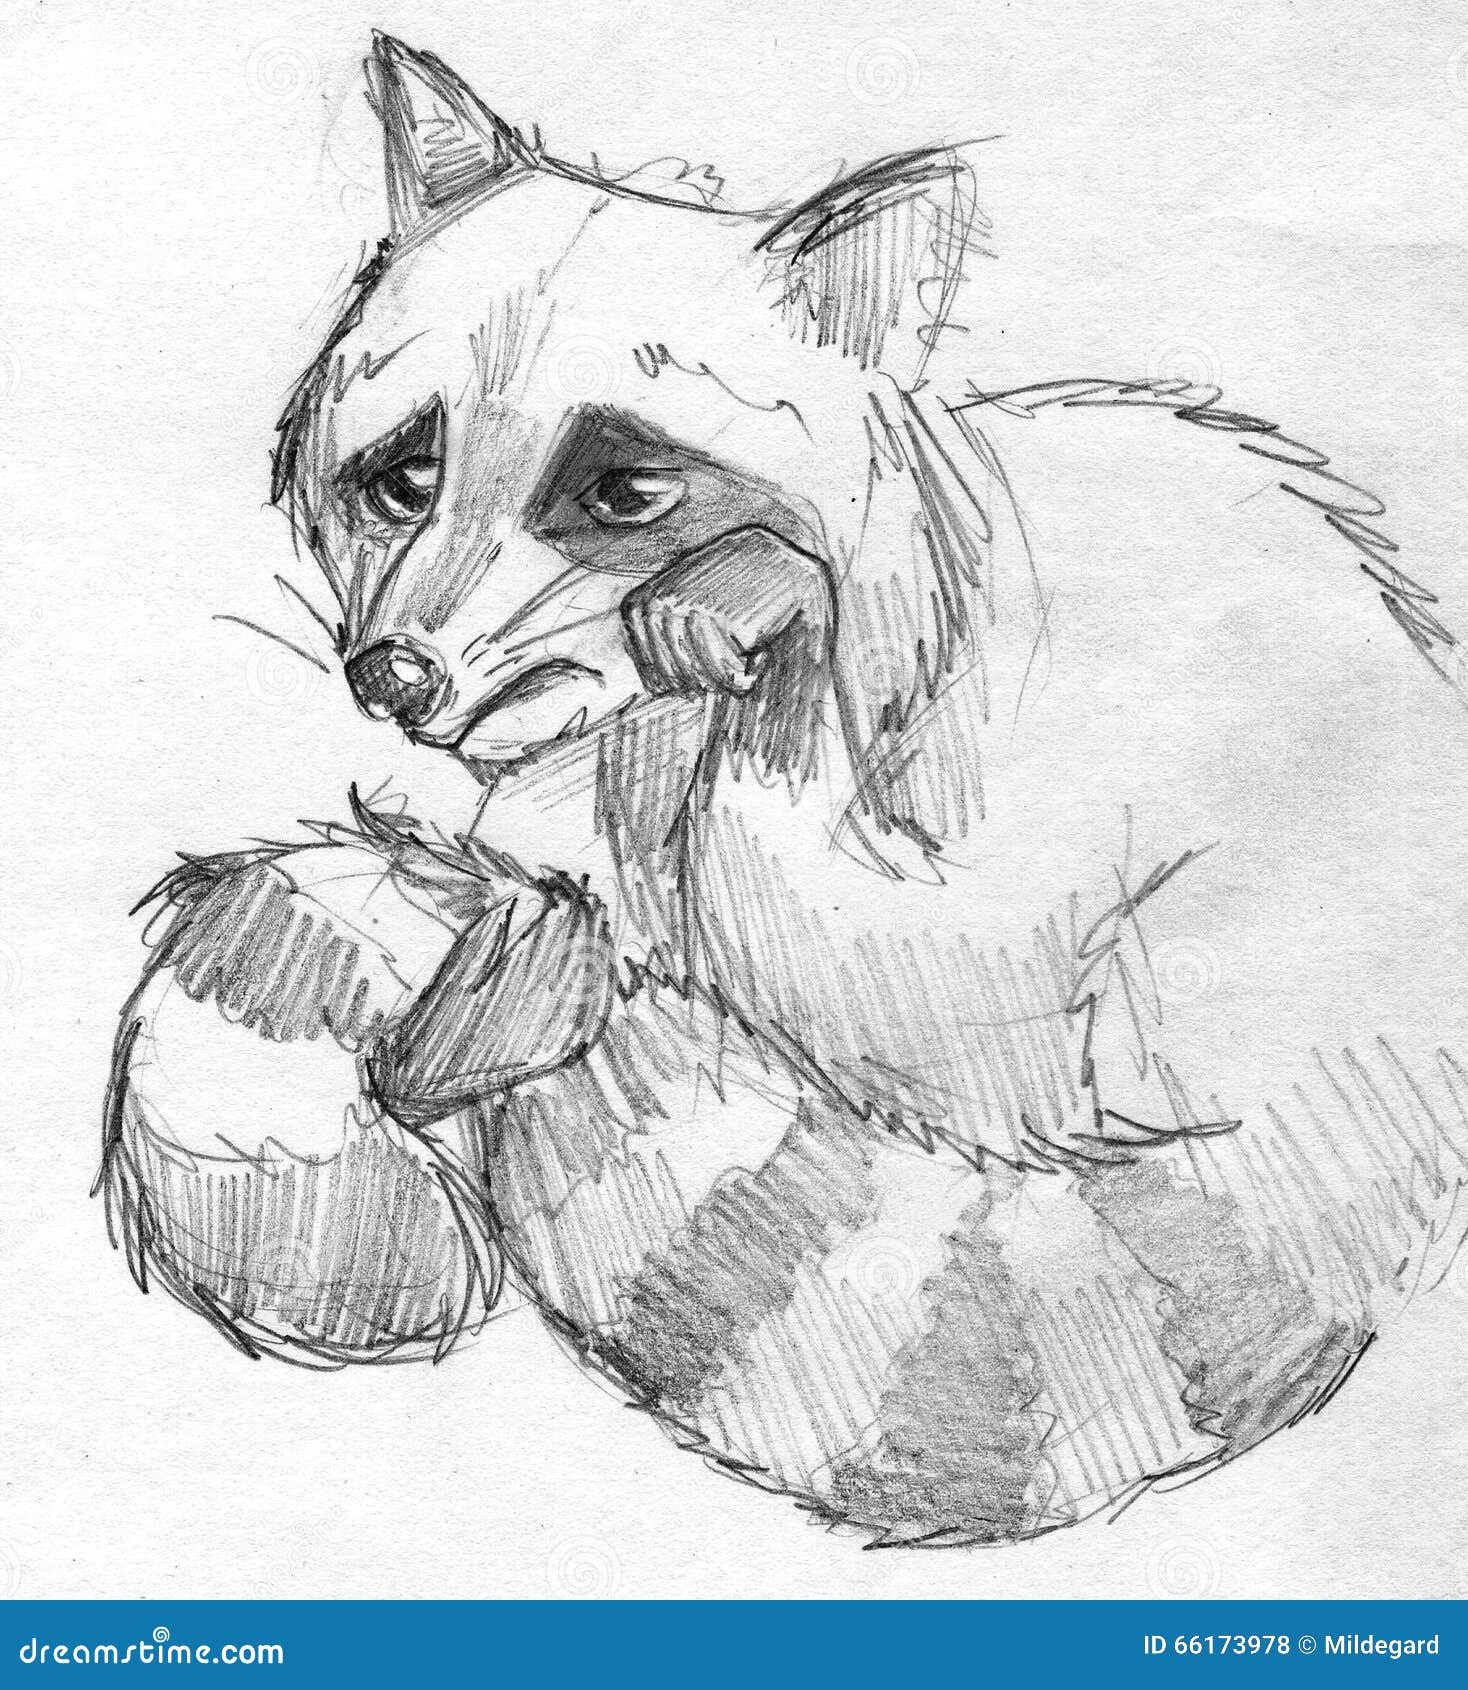 Original Pen and Ink Raccoon Artwork Signed by Artist Racoon Sketch Artwork Vintage Black and White Sketch Art Raccoon 1978